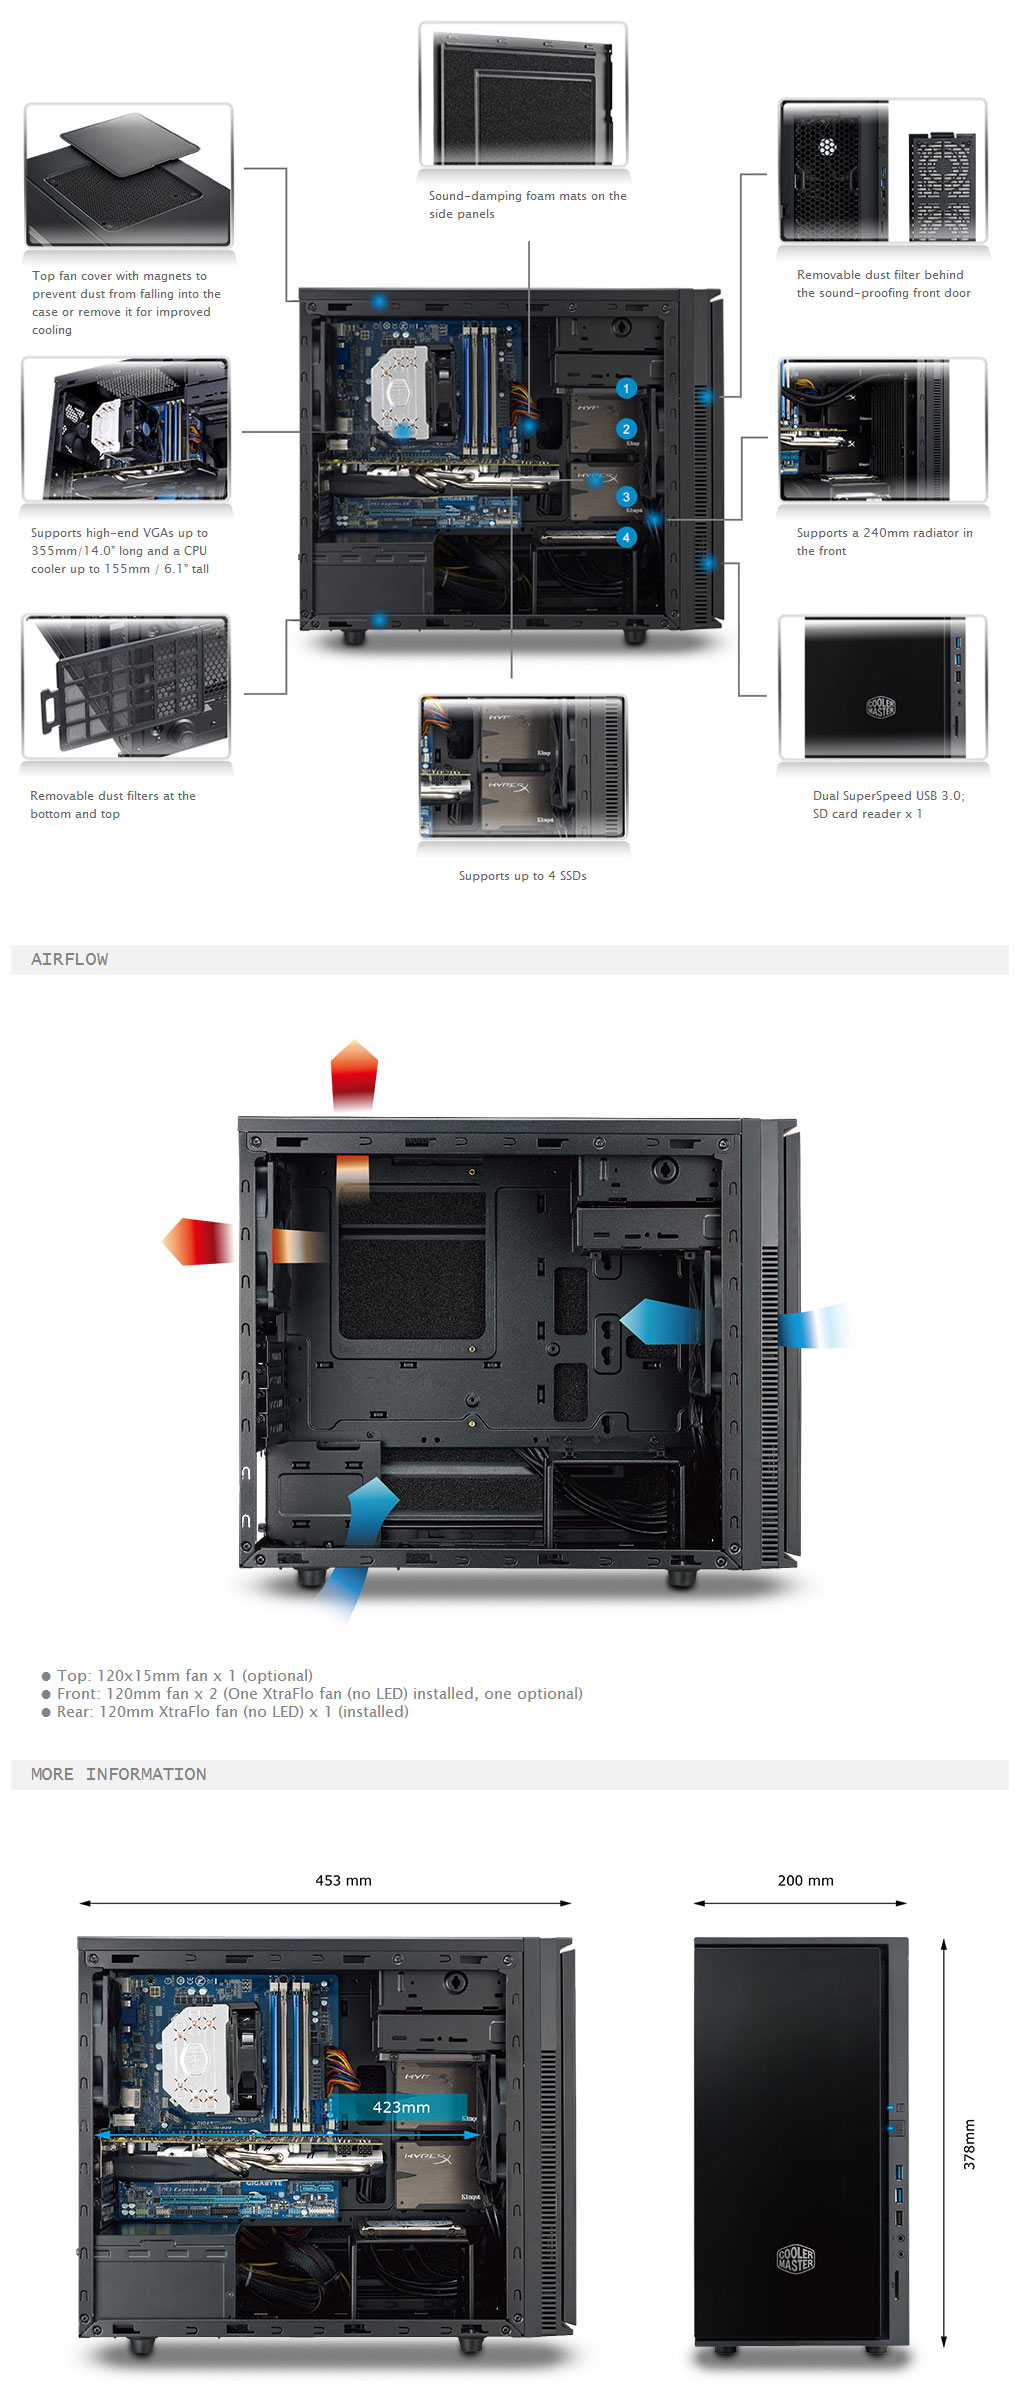 Cooler Master Silencio 352 Black mATX Case with Sound Absorbing Foam SIL-352M-KKN1 Details